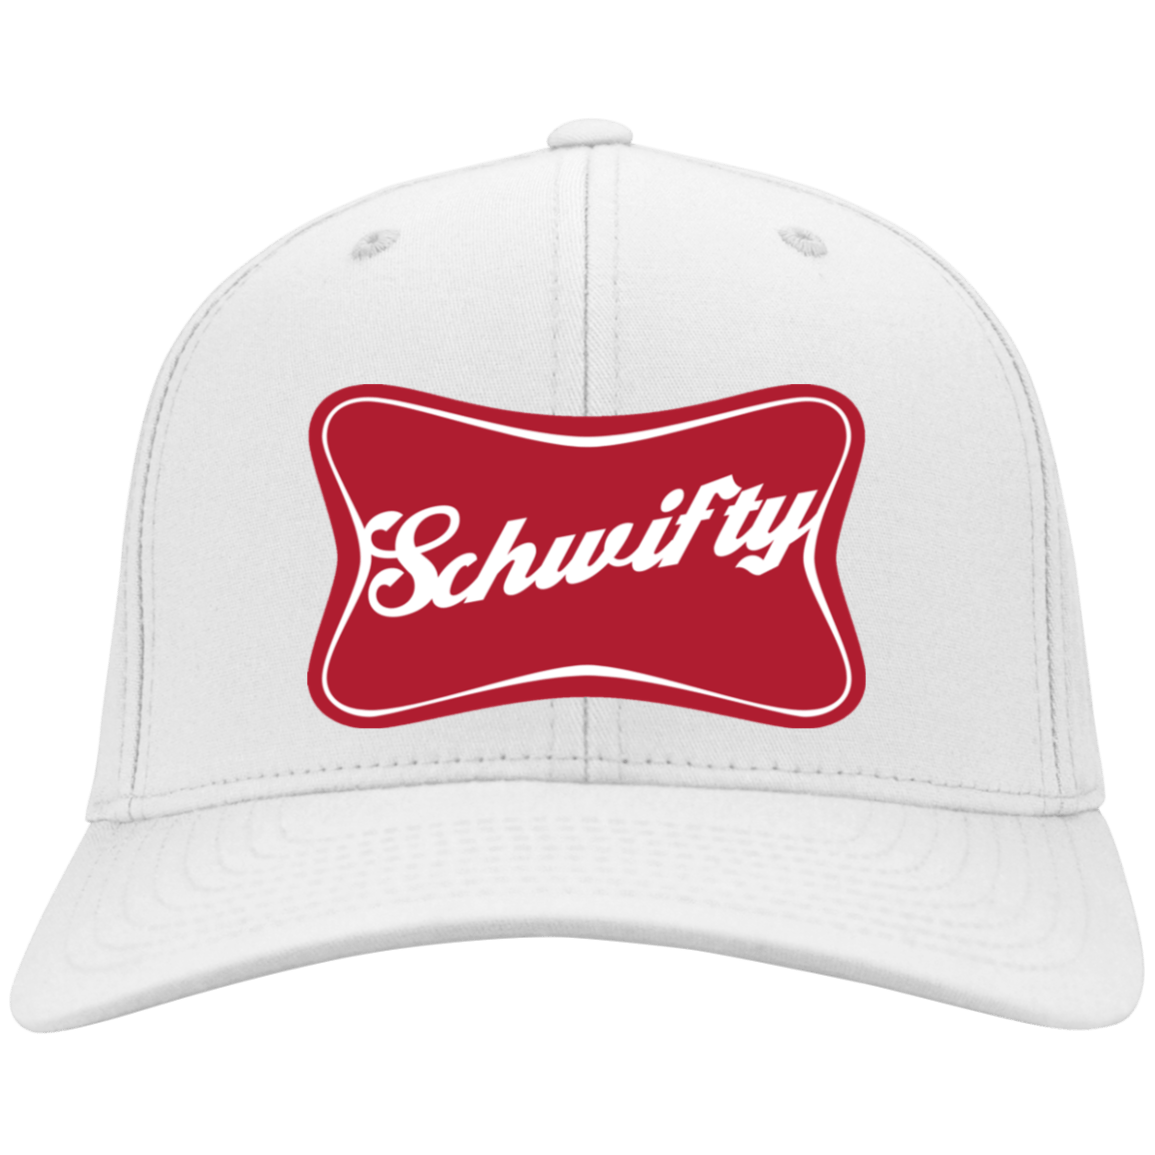 Schwifty Embroidered Flex Fit Twill Baseball Cap